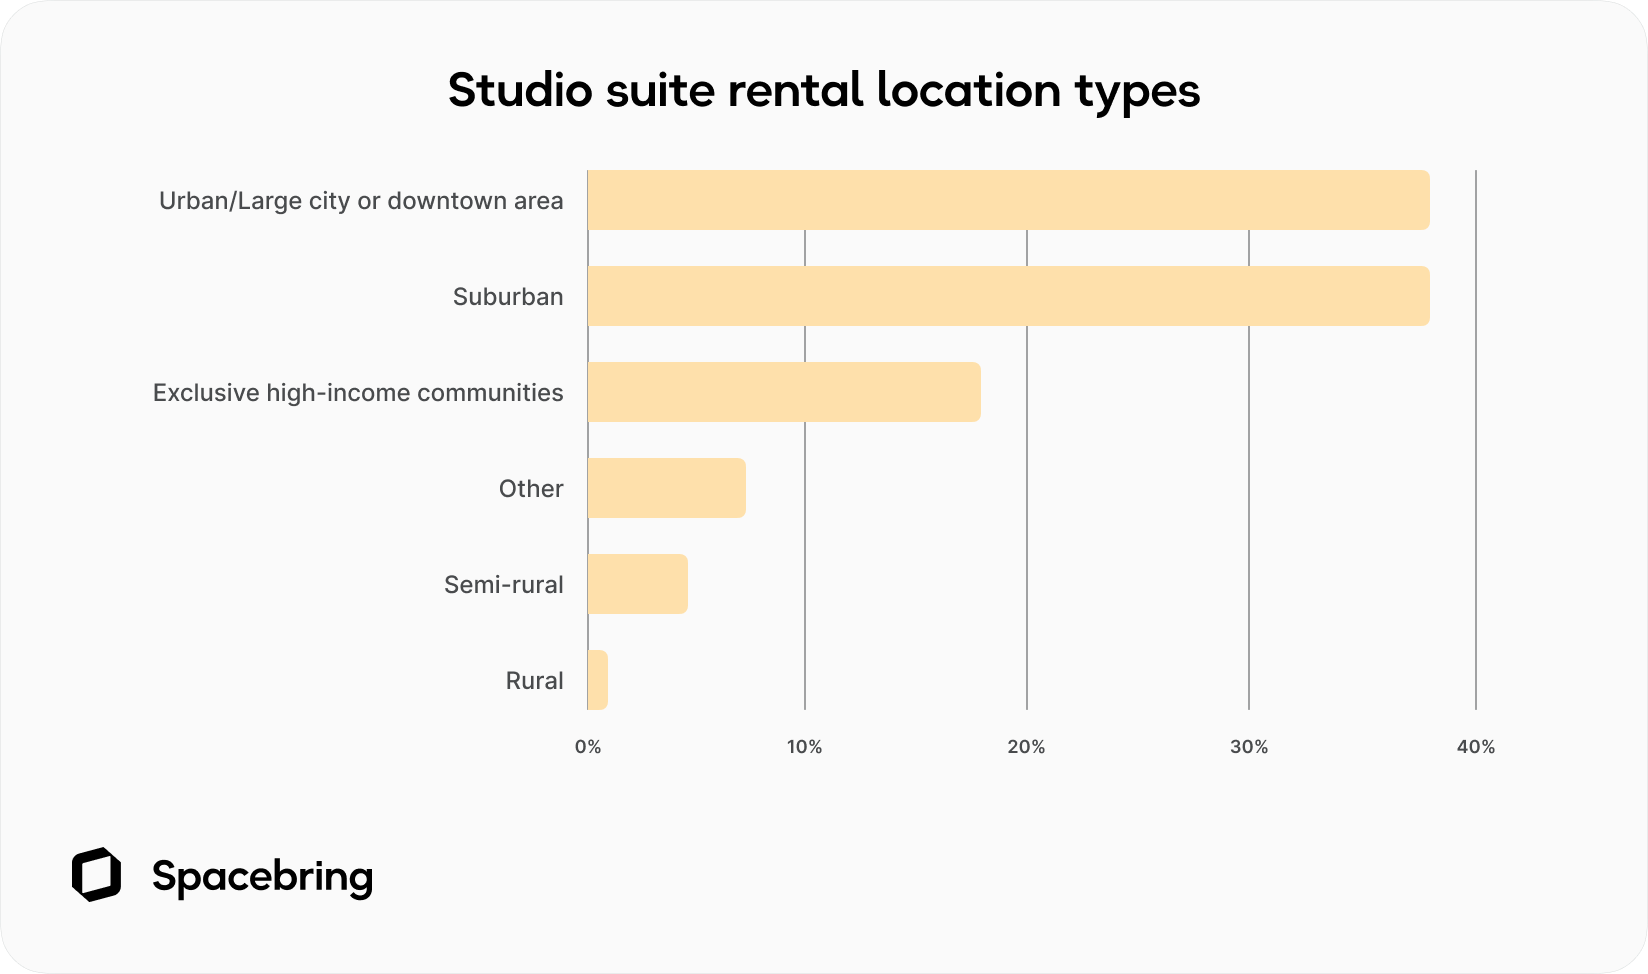 Salon suite rentals location types